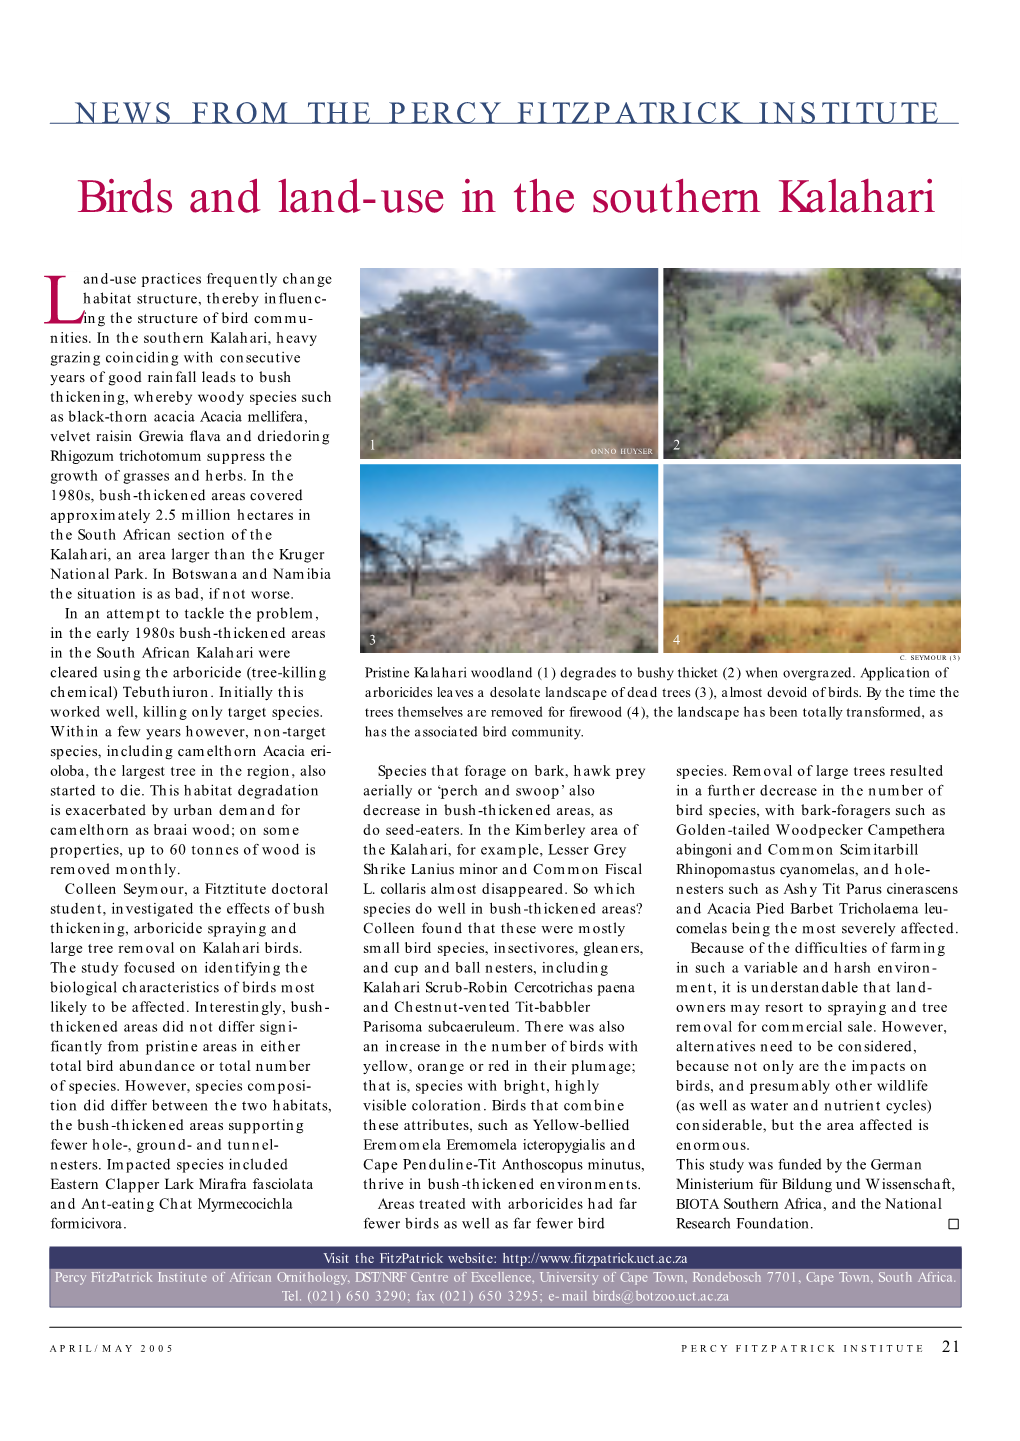 Birds and Land-Use in the Southern Kalahari